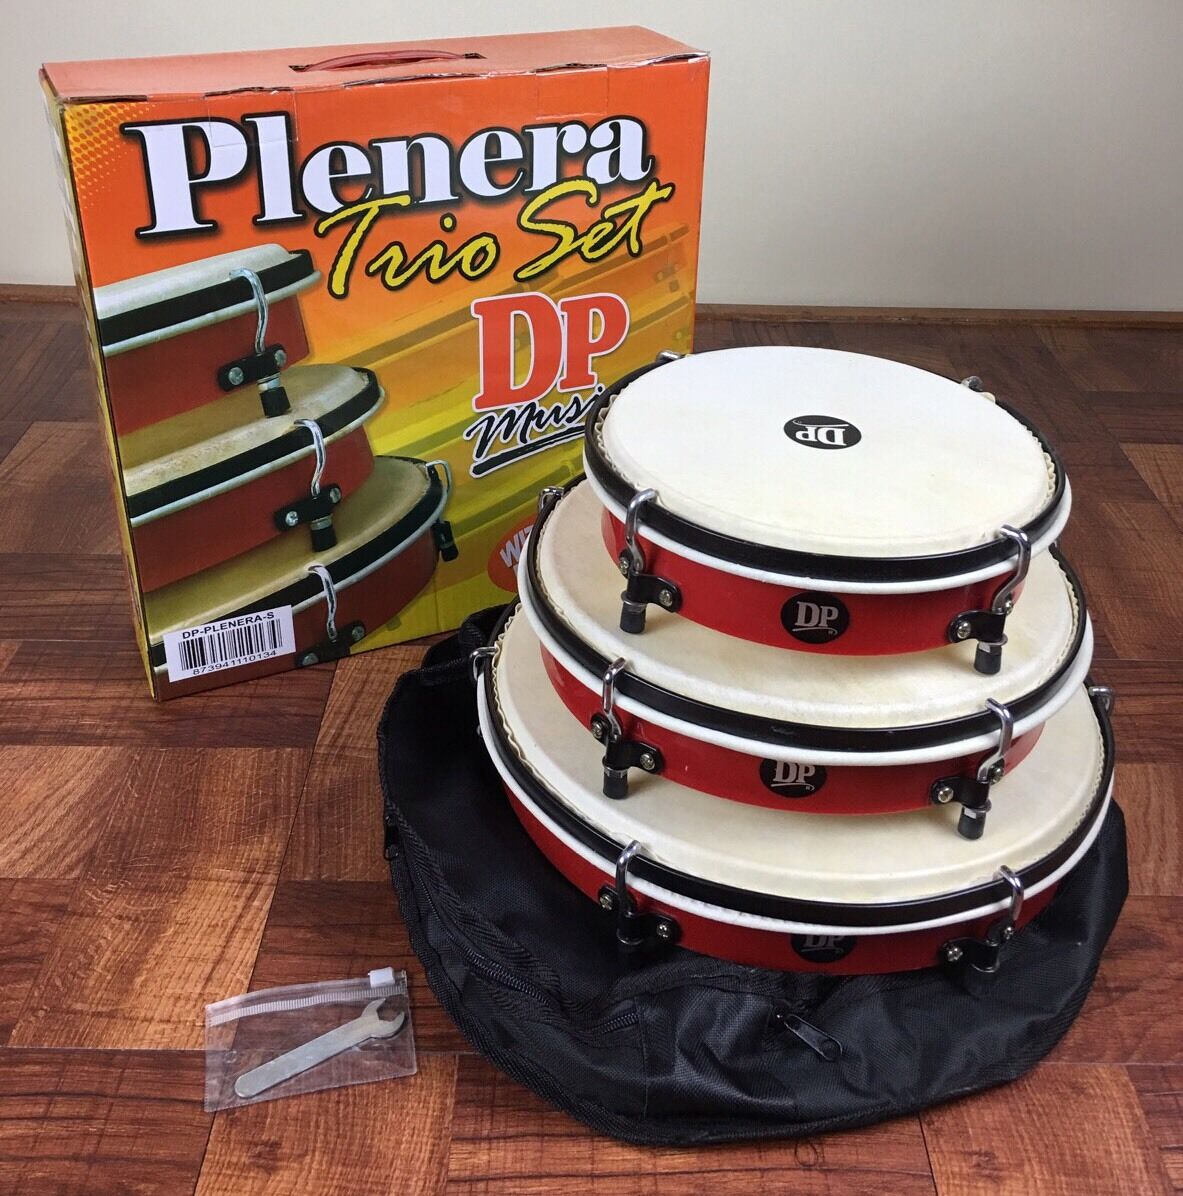 Plenera Drums, Set Of 3 Drums with Carry Bag-DP